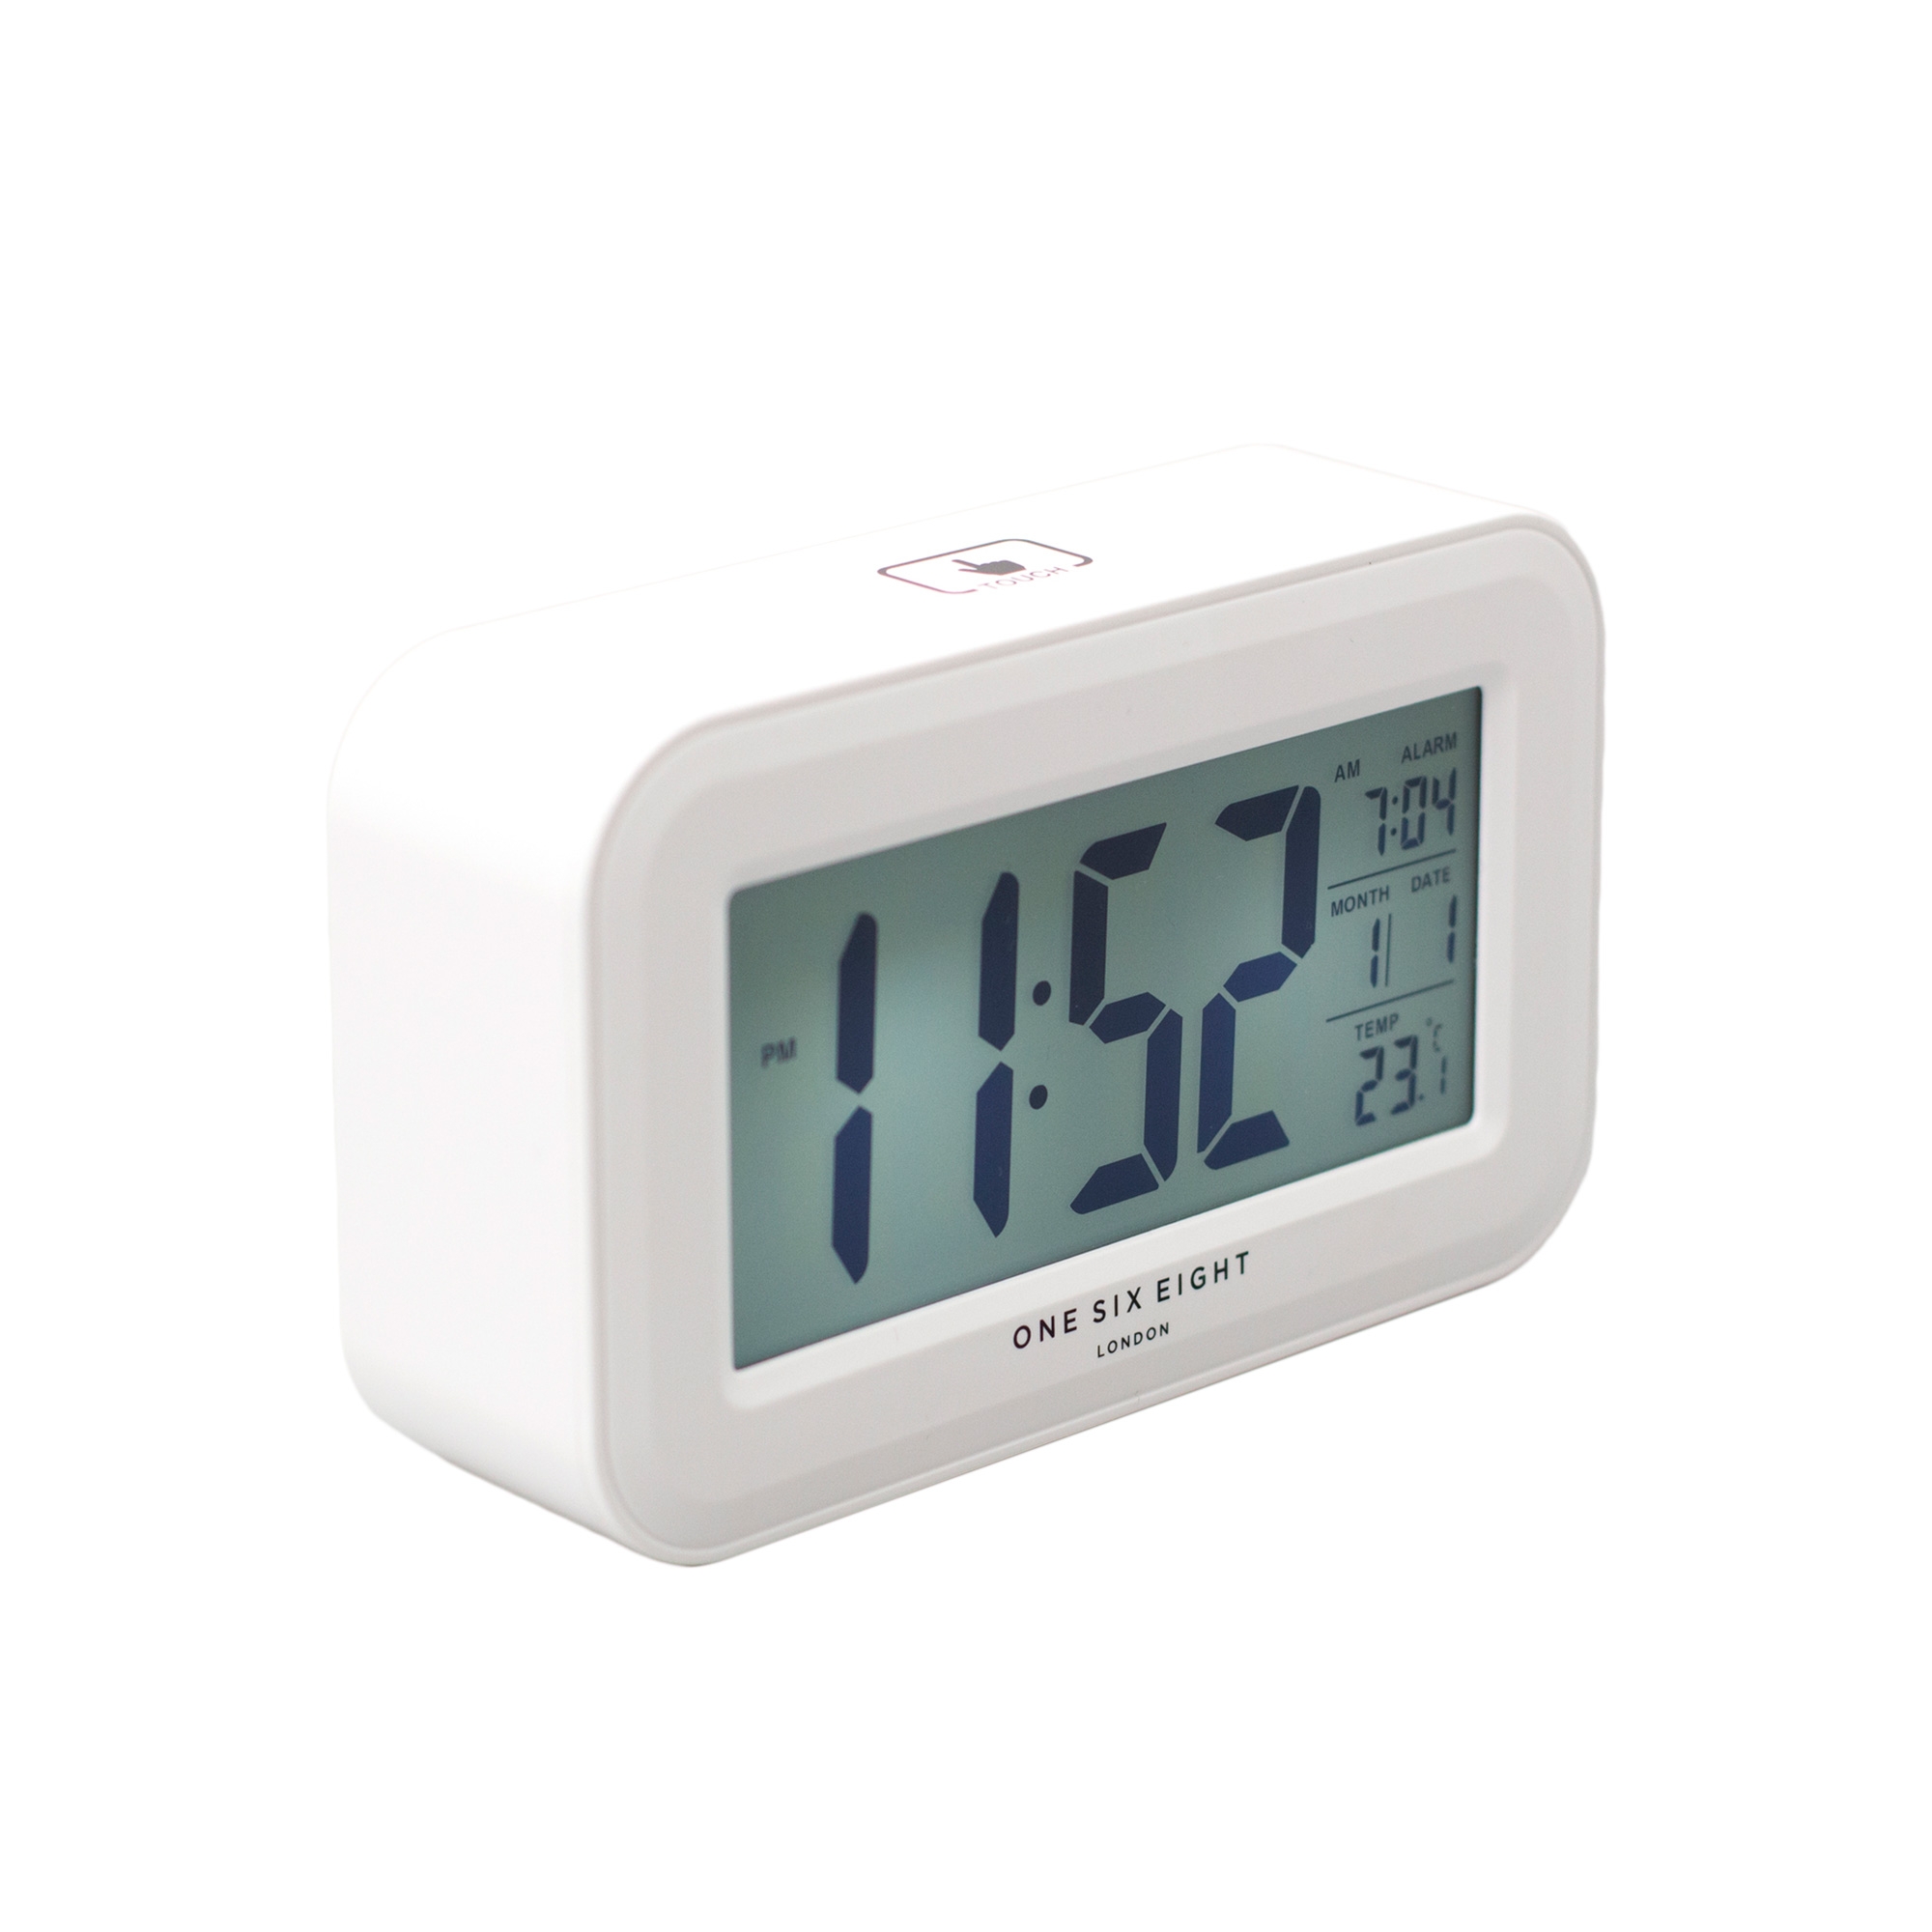 One Six Eight London Reilly Digital Alarm Clock White Image 2